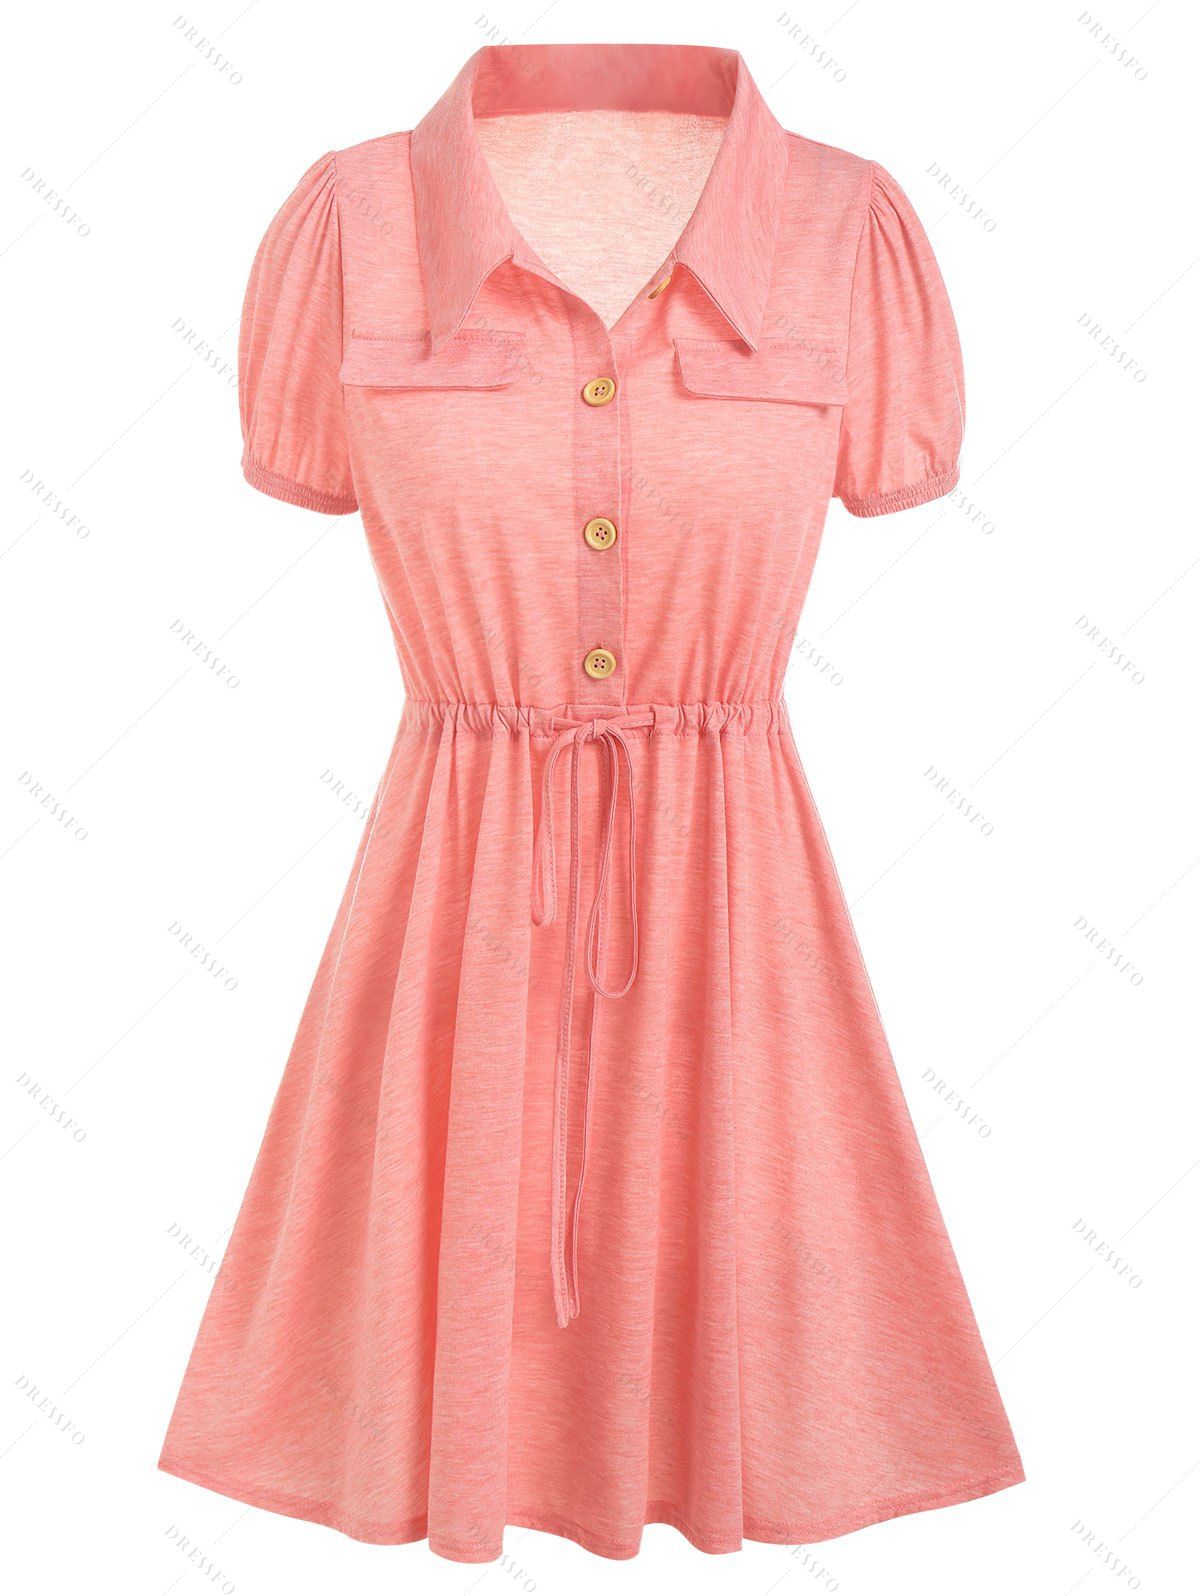 Half Button Toggle Drawstring Heathered Dress - LIGHT PINK L